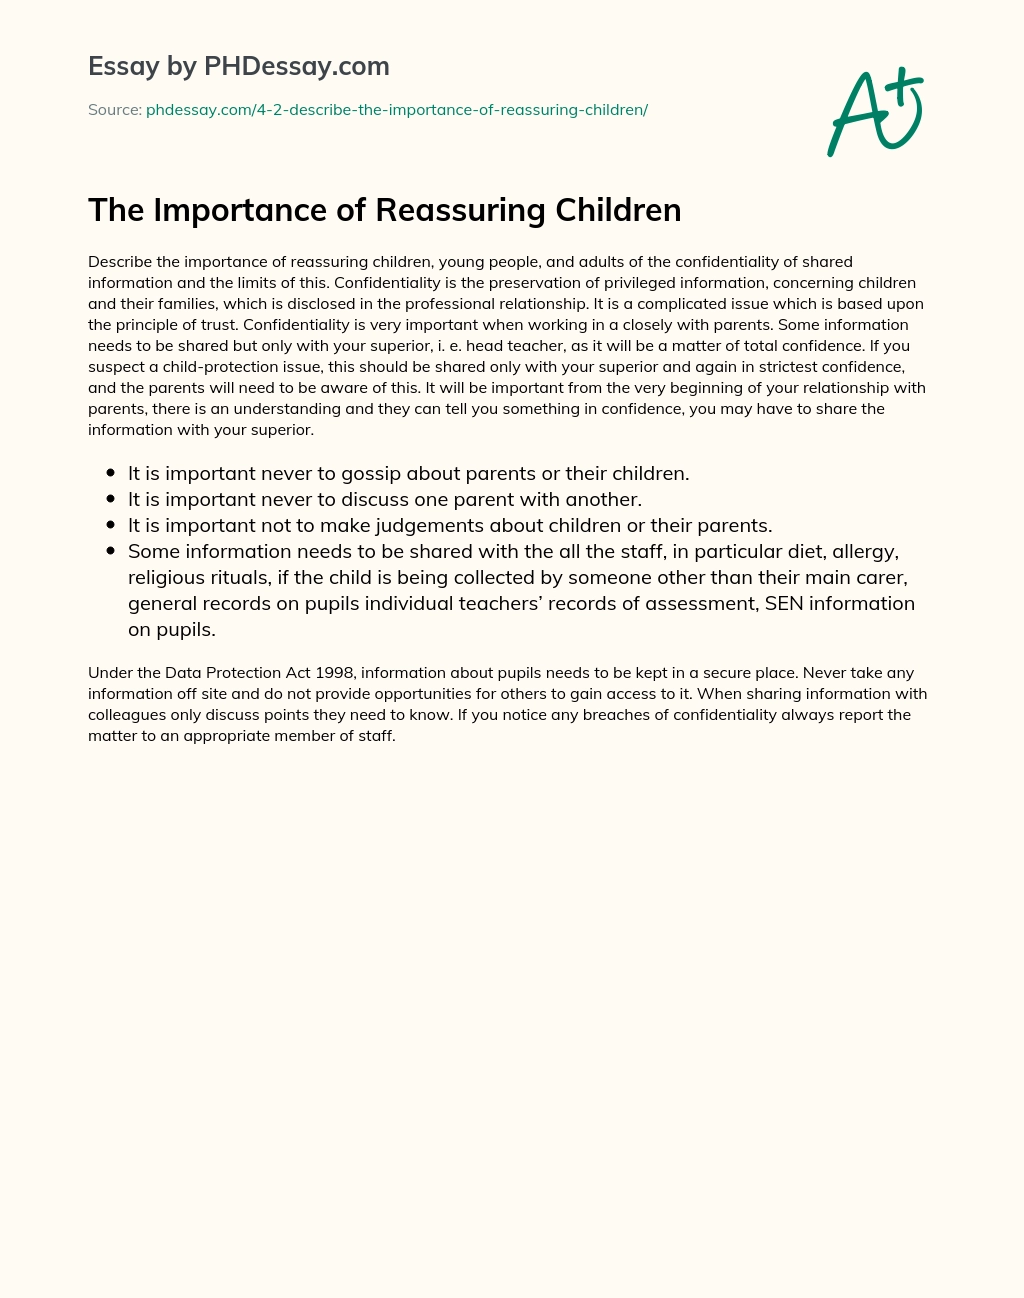 The Importance of Reassuring Children essay